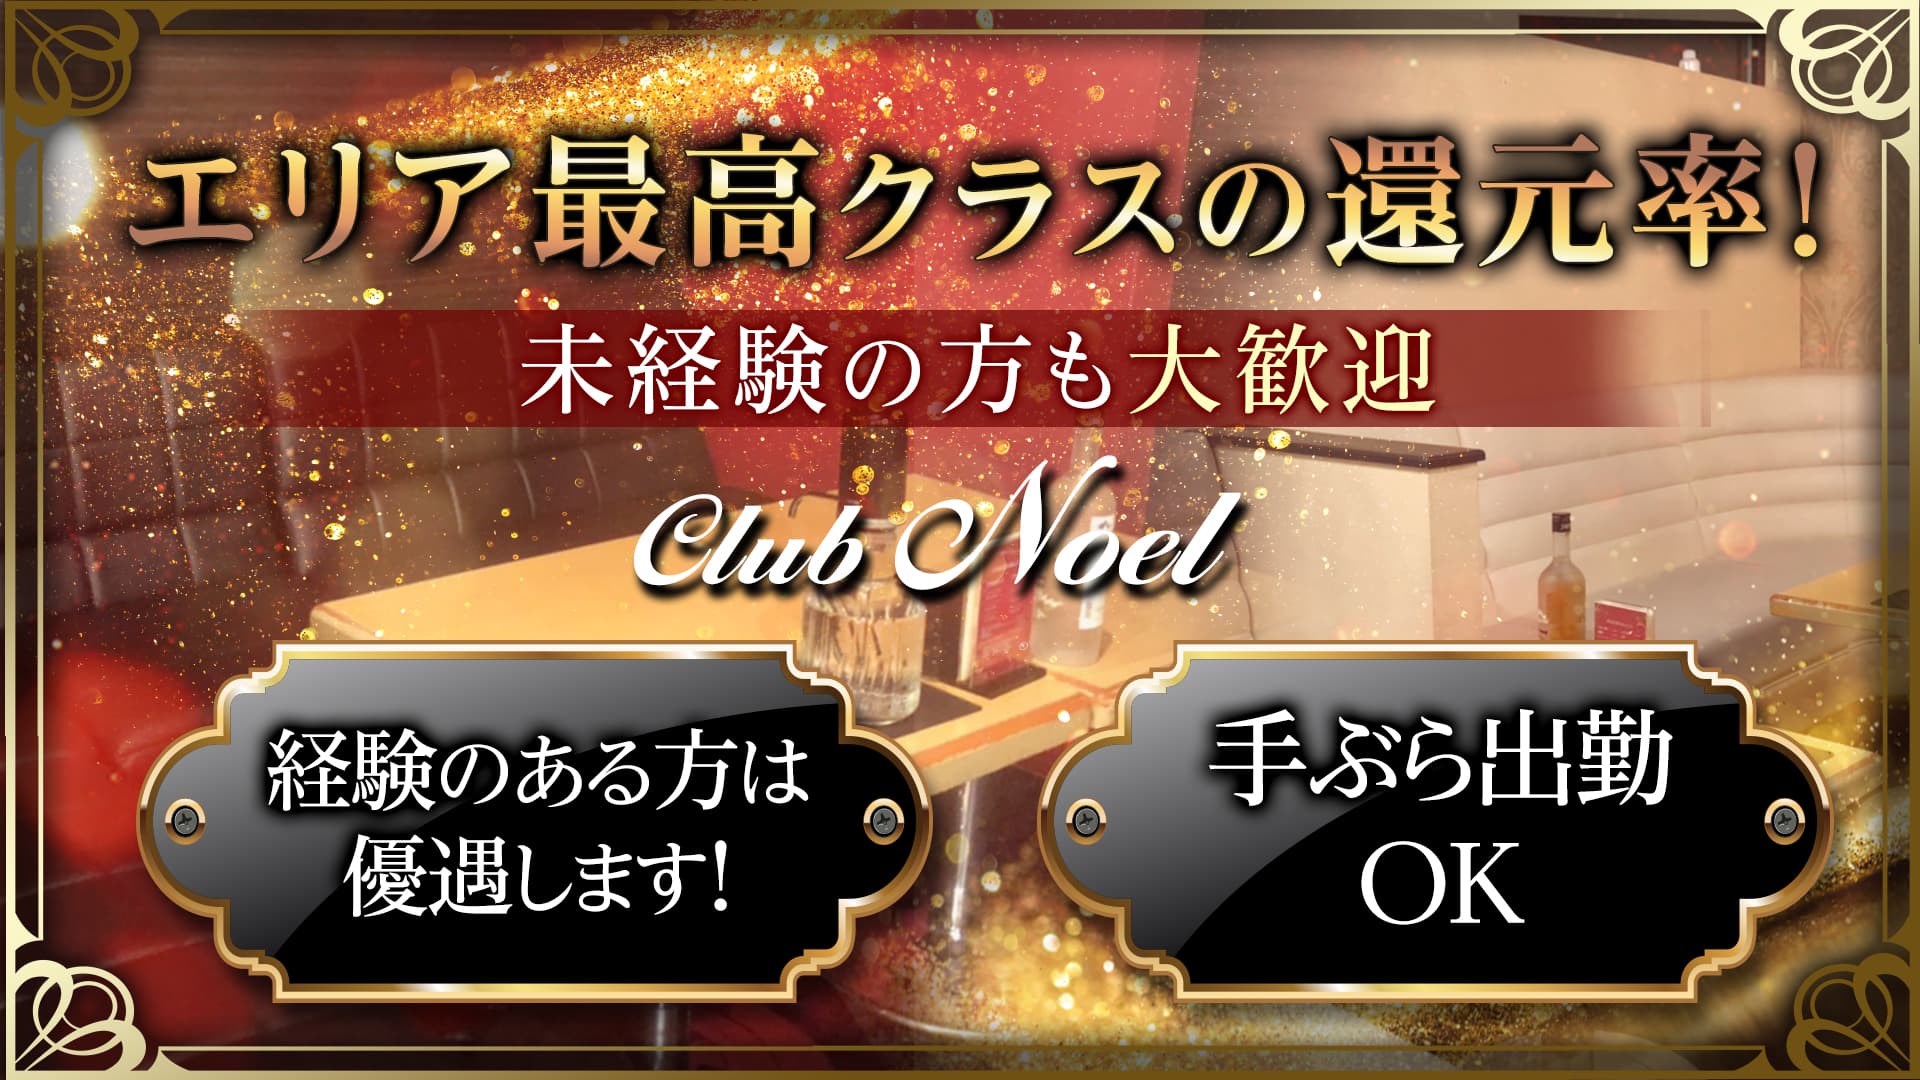 Club Noel～ノエル～【公式体入・求人情報】 平塚キャバクラ TOP画像